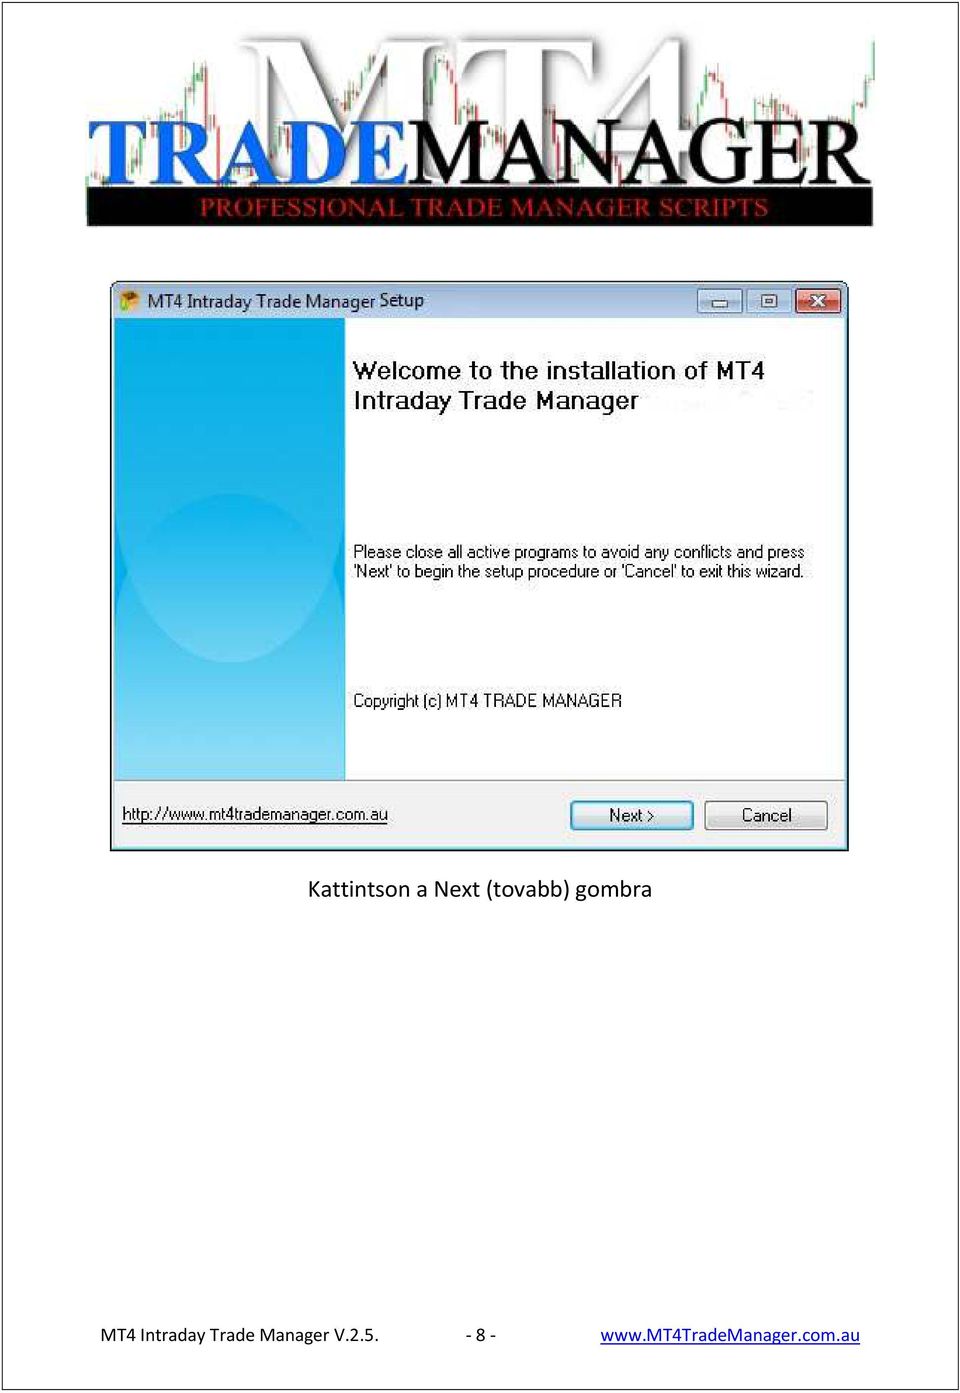 Intraday Trade Manager V.